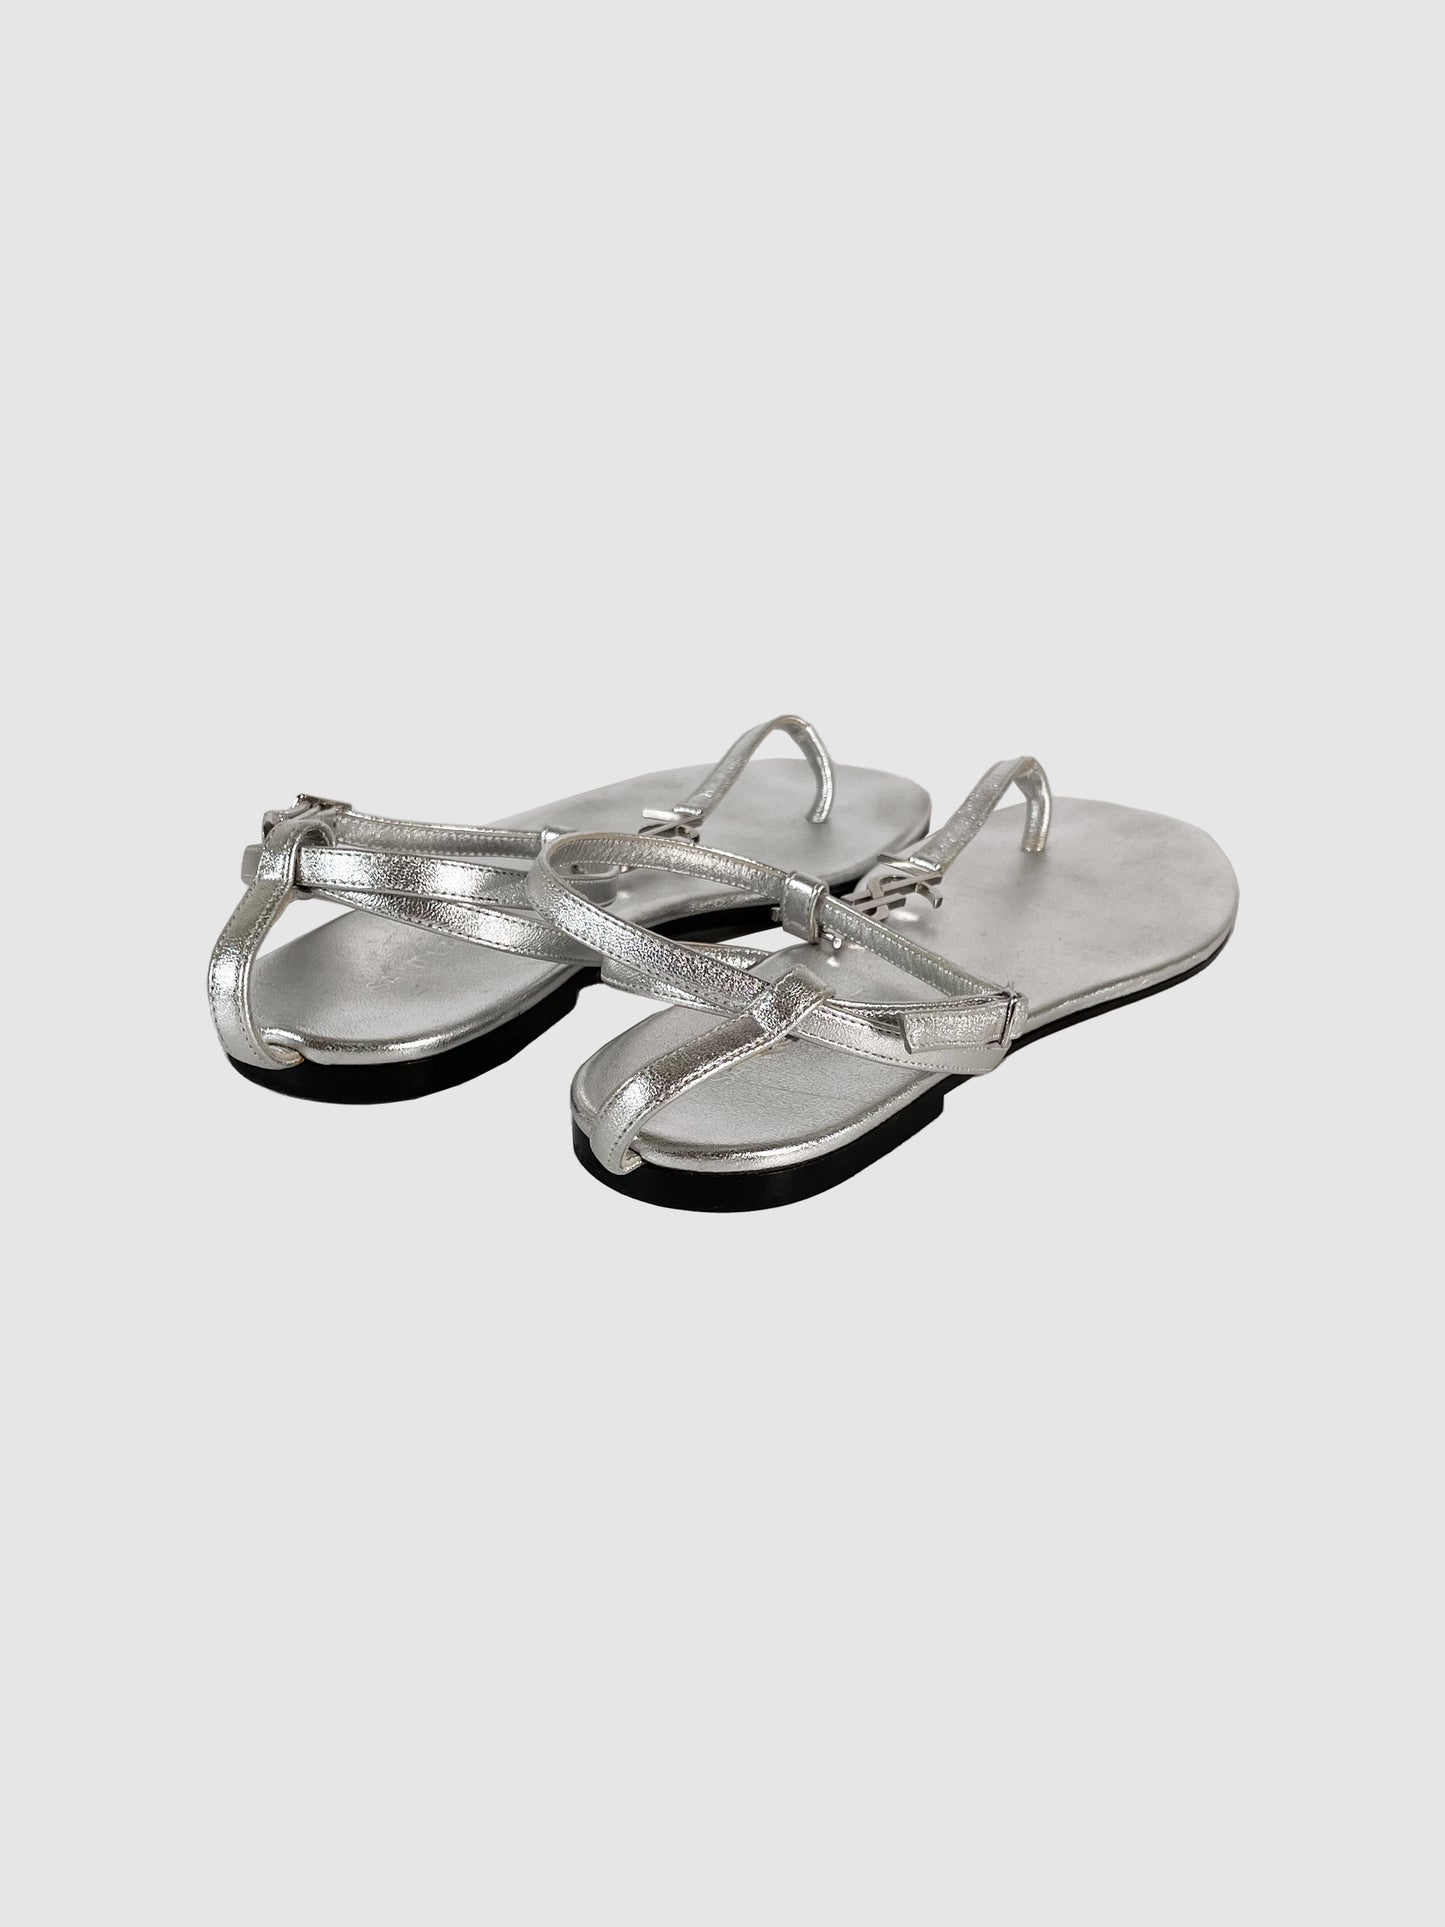 Strappy YSL Sandals - Size 7.5